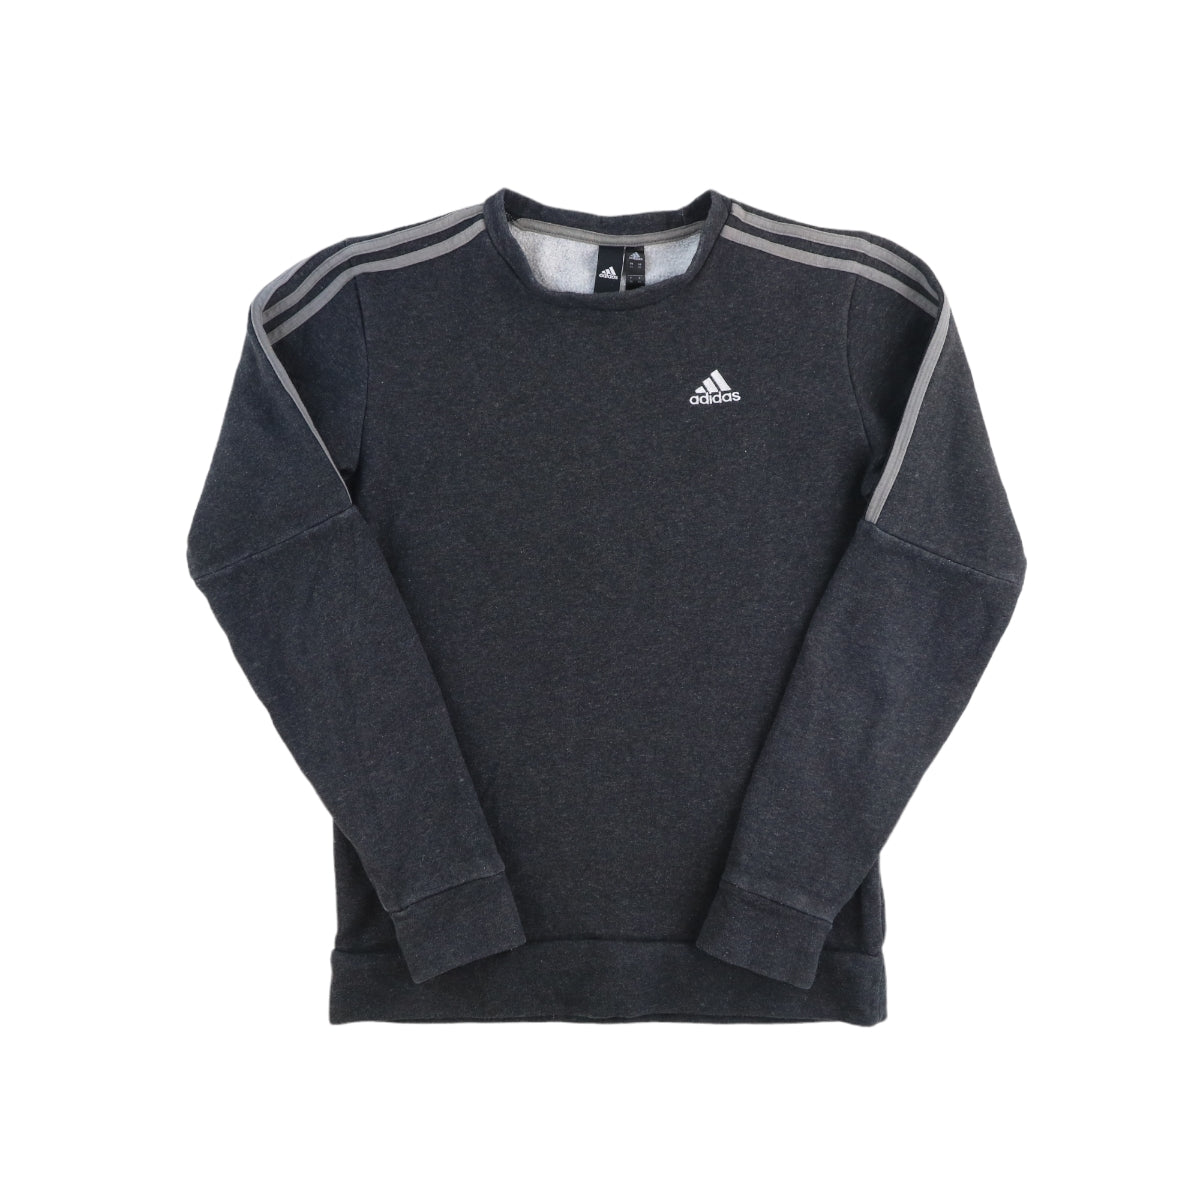 Adidas Sweatshirt (XS)